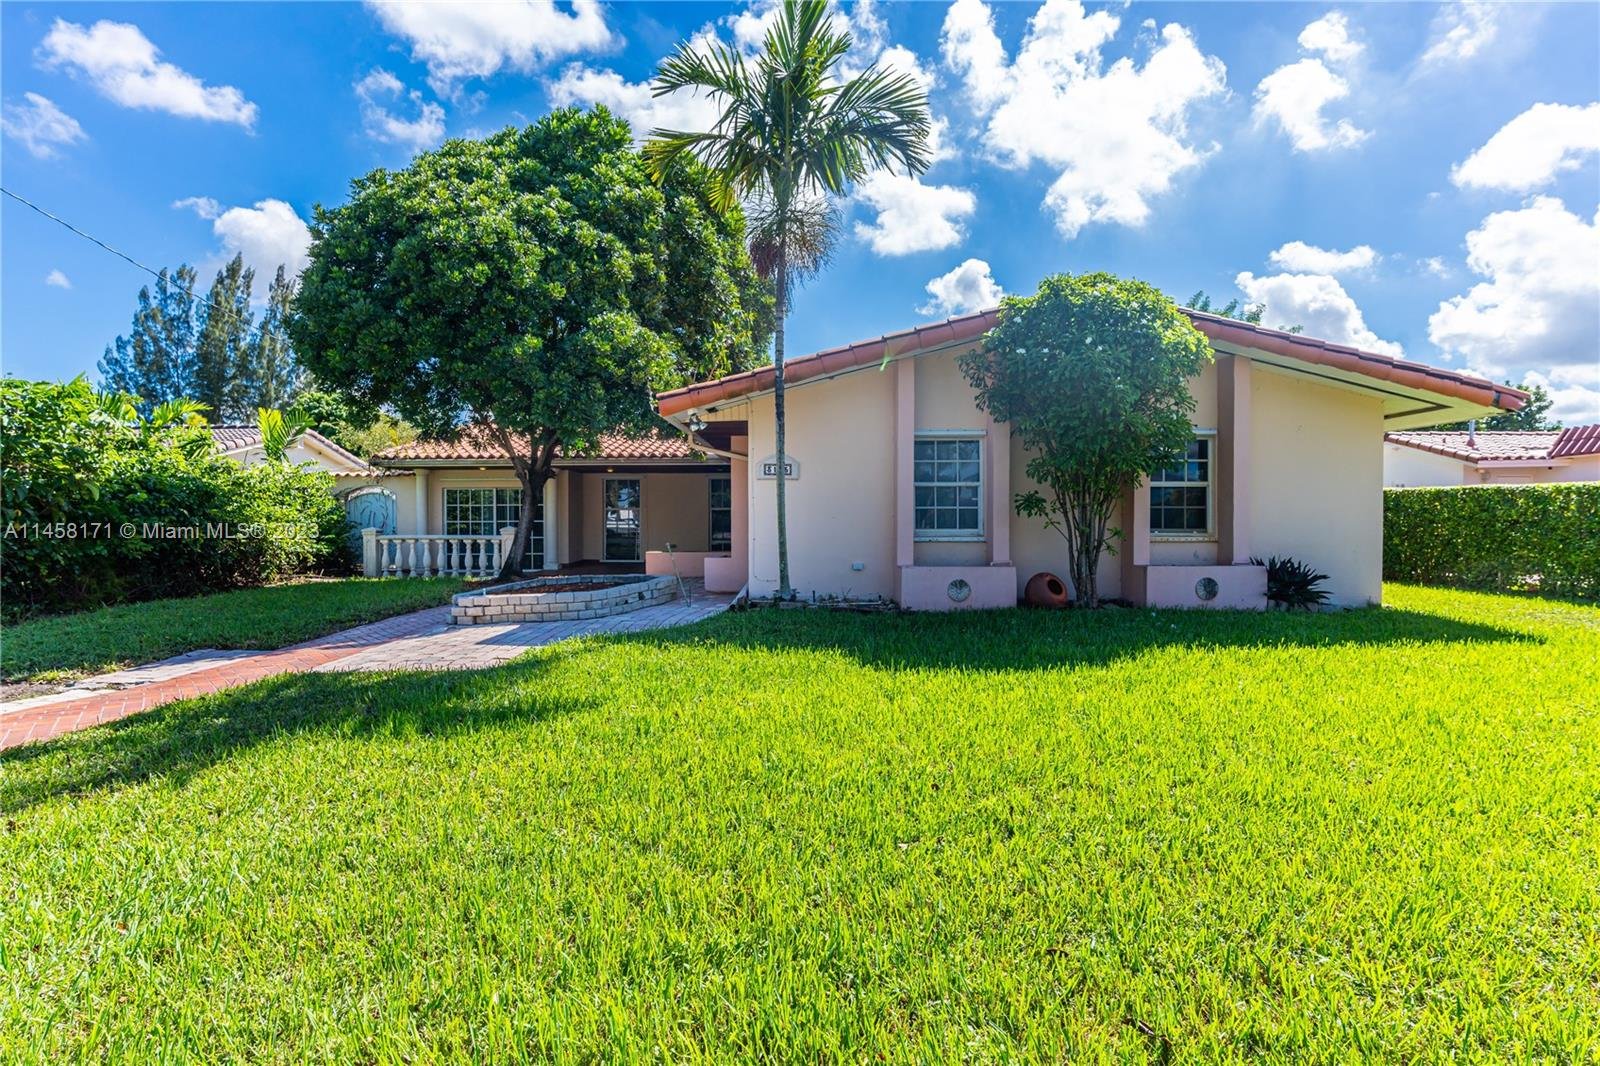 Real estate property located at 3105 124th Ct, Miami-Dade County, Miami, FL